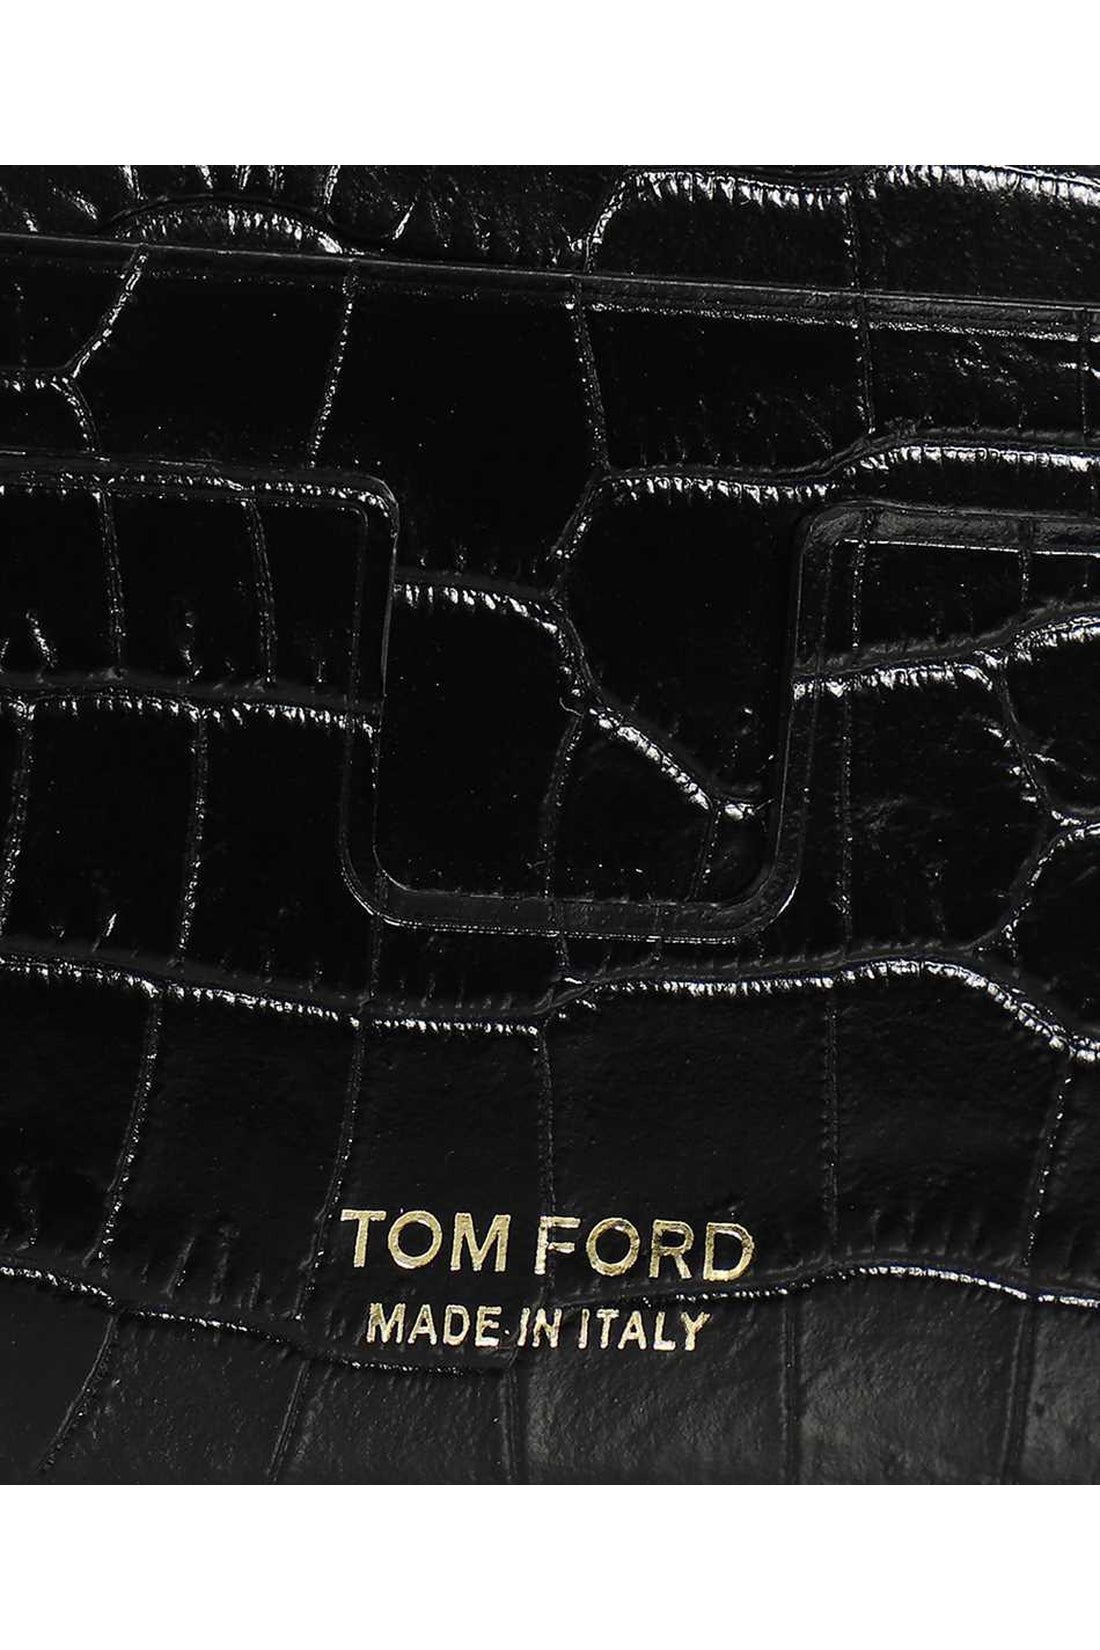 Tom Ford-OUTLET-SALE-Leather card holder-ARCHIVIST